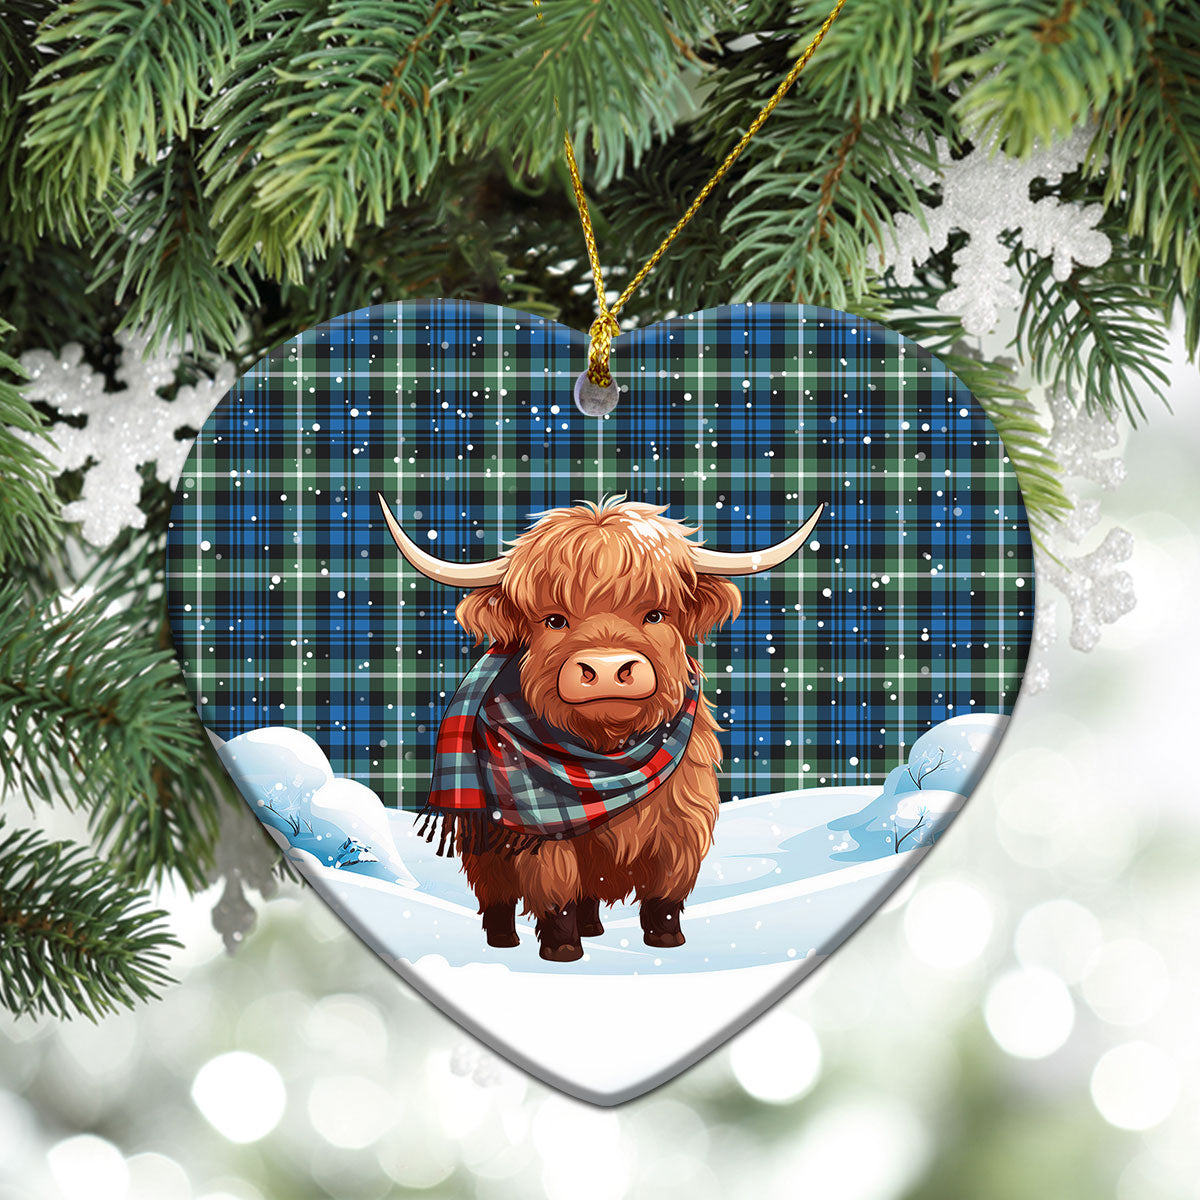 Lamont Ancient Tartan Christmas Ceramic Ornament - Highland Cows Snow Style